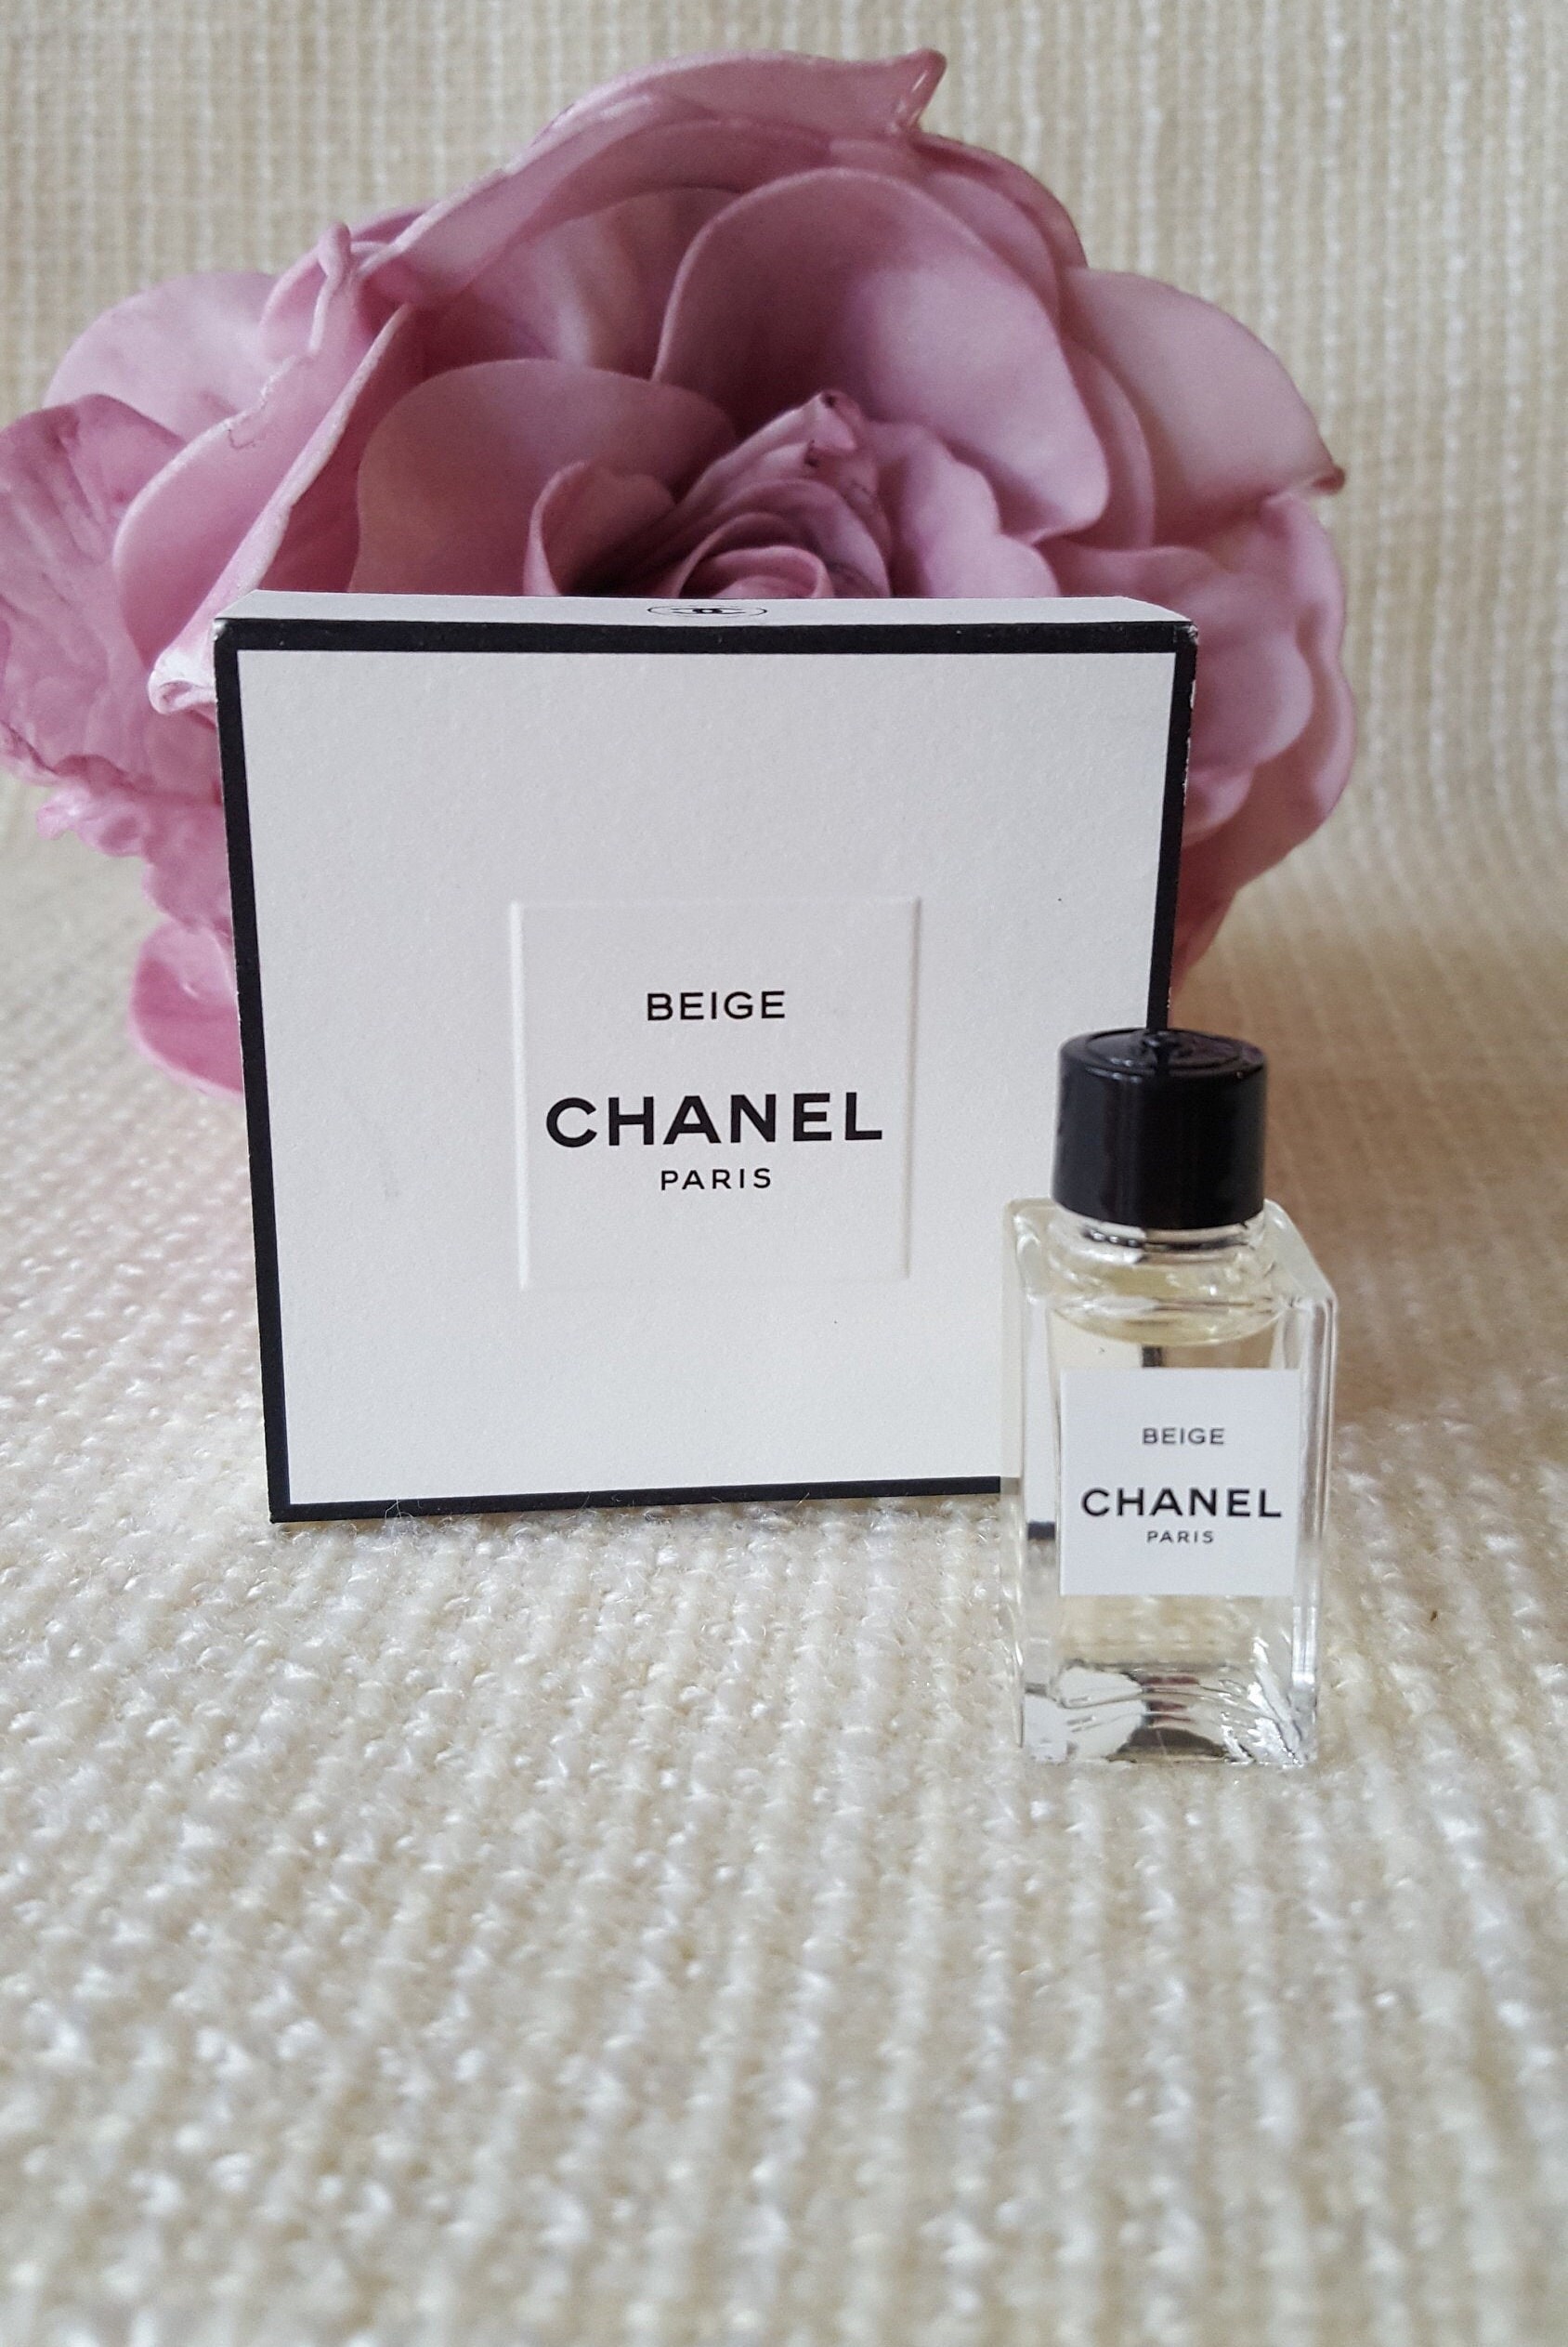 Chanel Beige 0.12 oz / 4 ml EAU DE TOILETTE Miniature